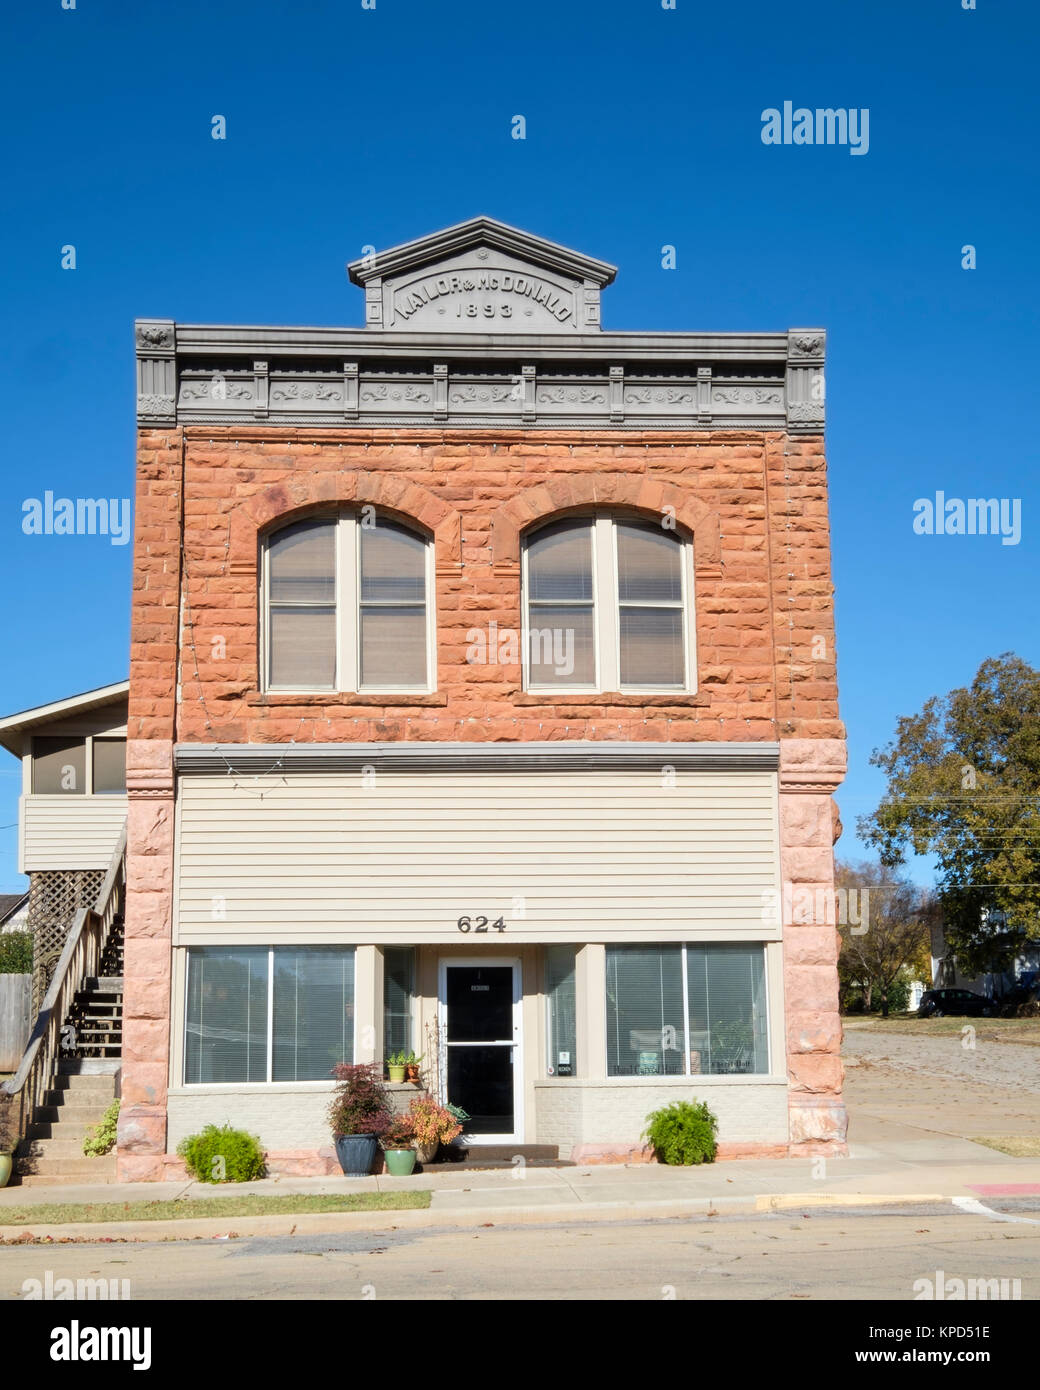 Kaylor McDonald & building, circa 1893, costruite di rosso di arenaria nativo, 624 e Oklahoma Ave., Guthrie, Oklahoma, Stati Uniti d'America. Guthrie quartiere storico. Foto Stock